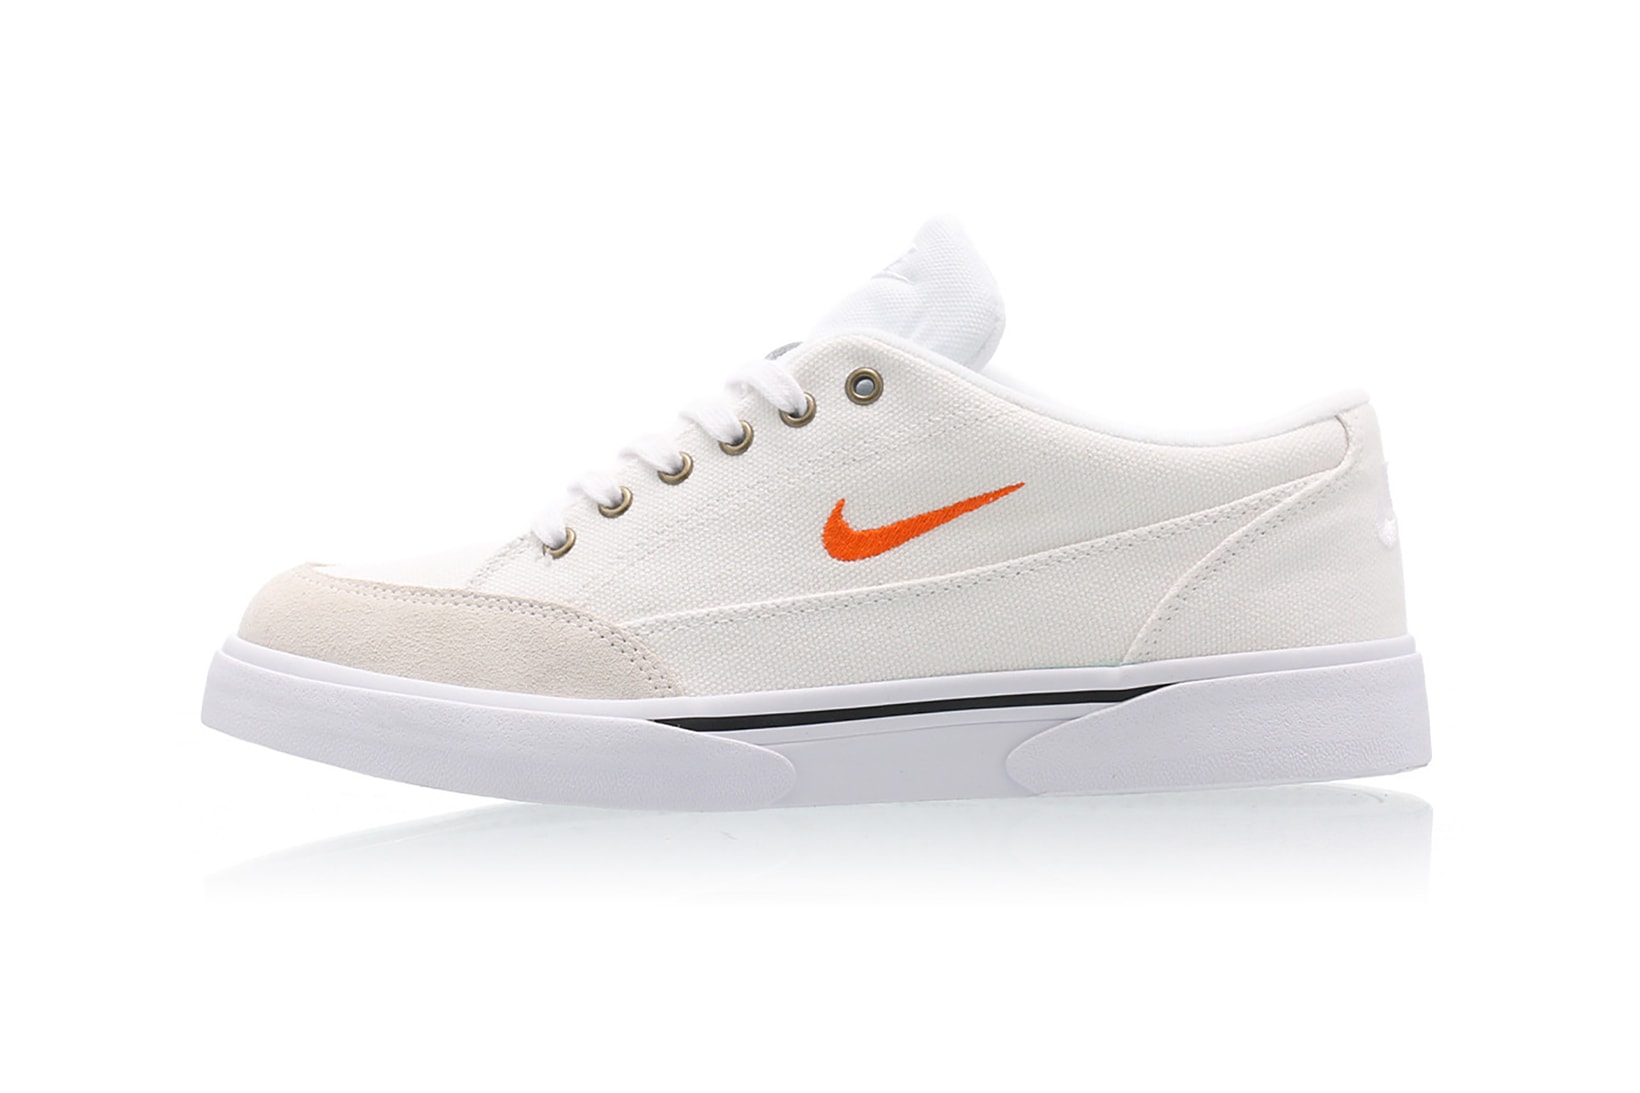 nike gts great tennis shoe 16 sneakers cream white orange black shoes sneakerhead footwear